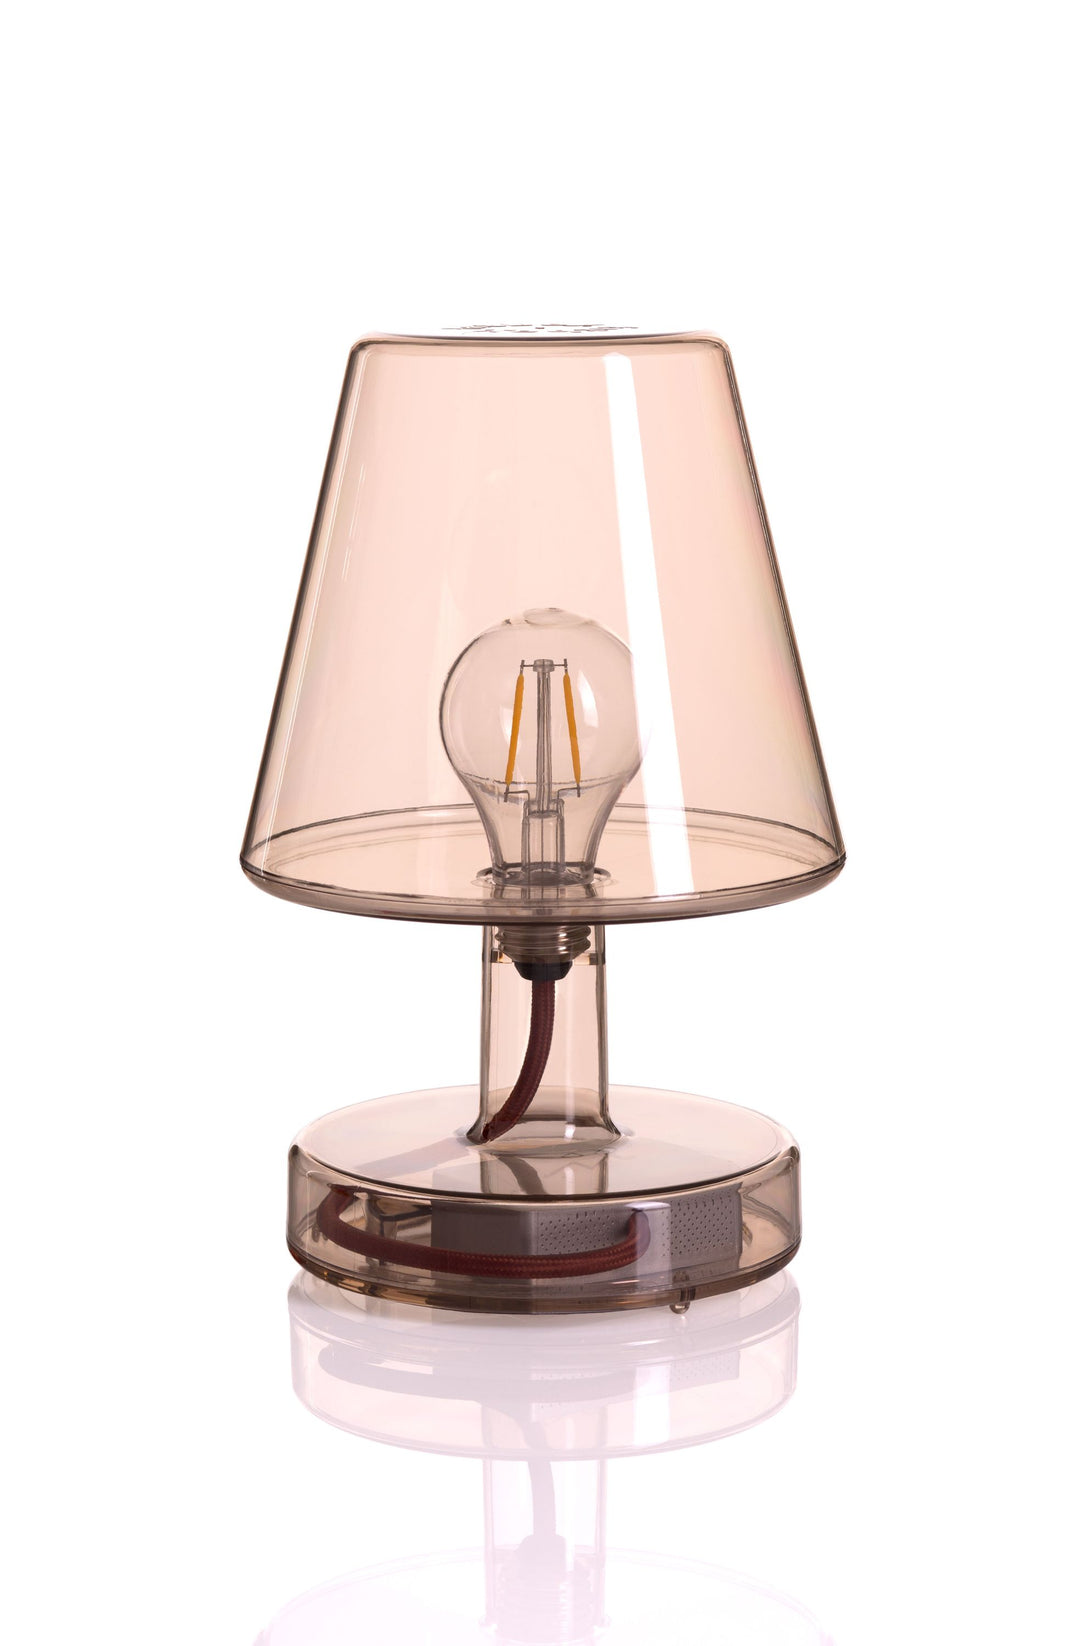 Translotje table lamp